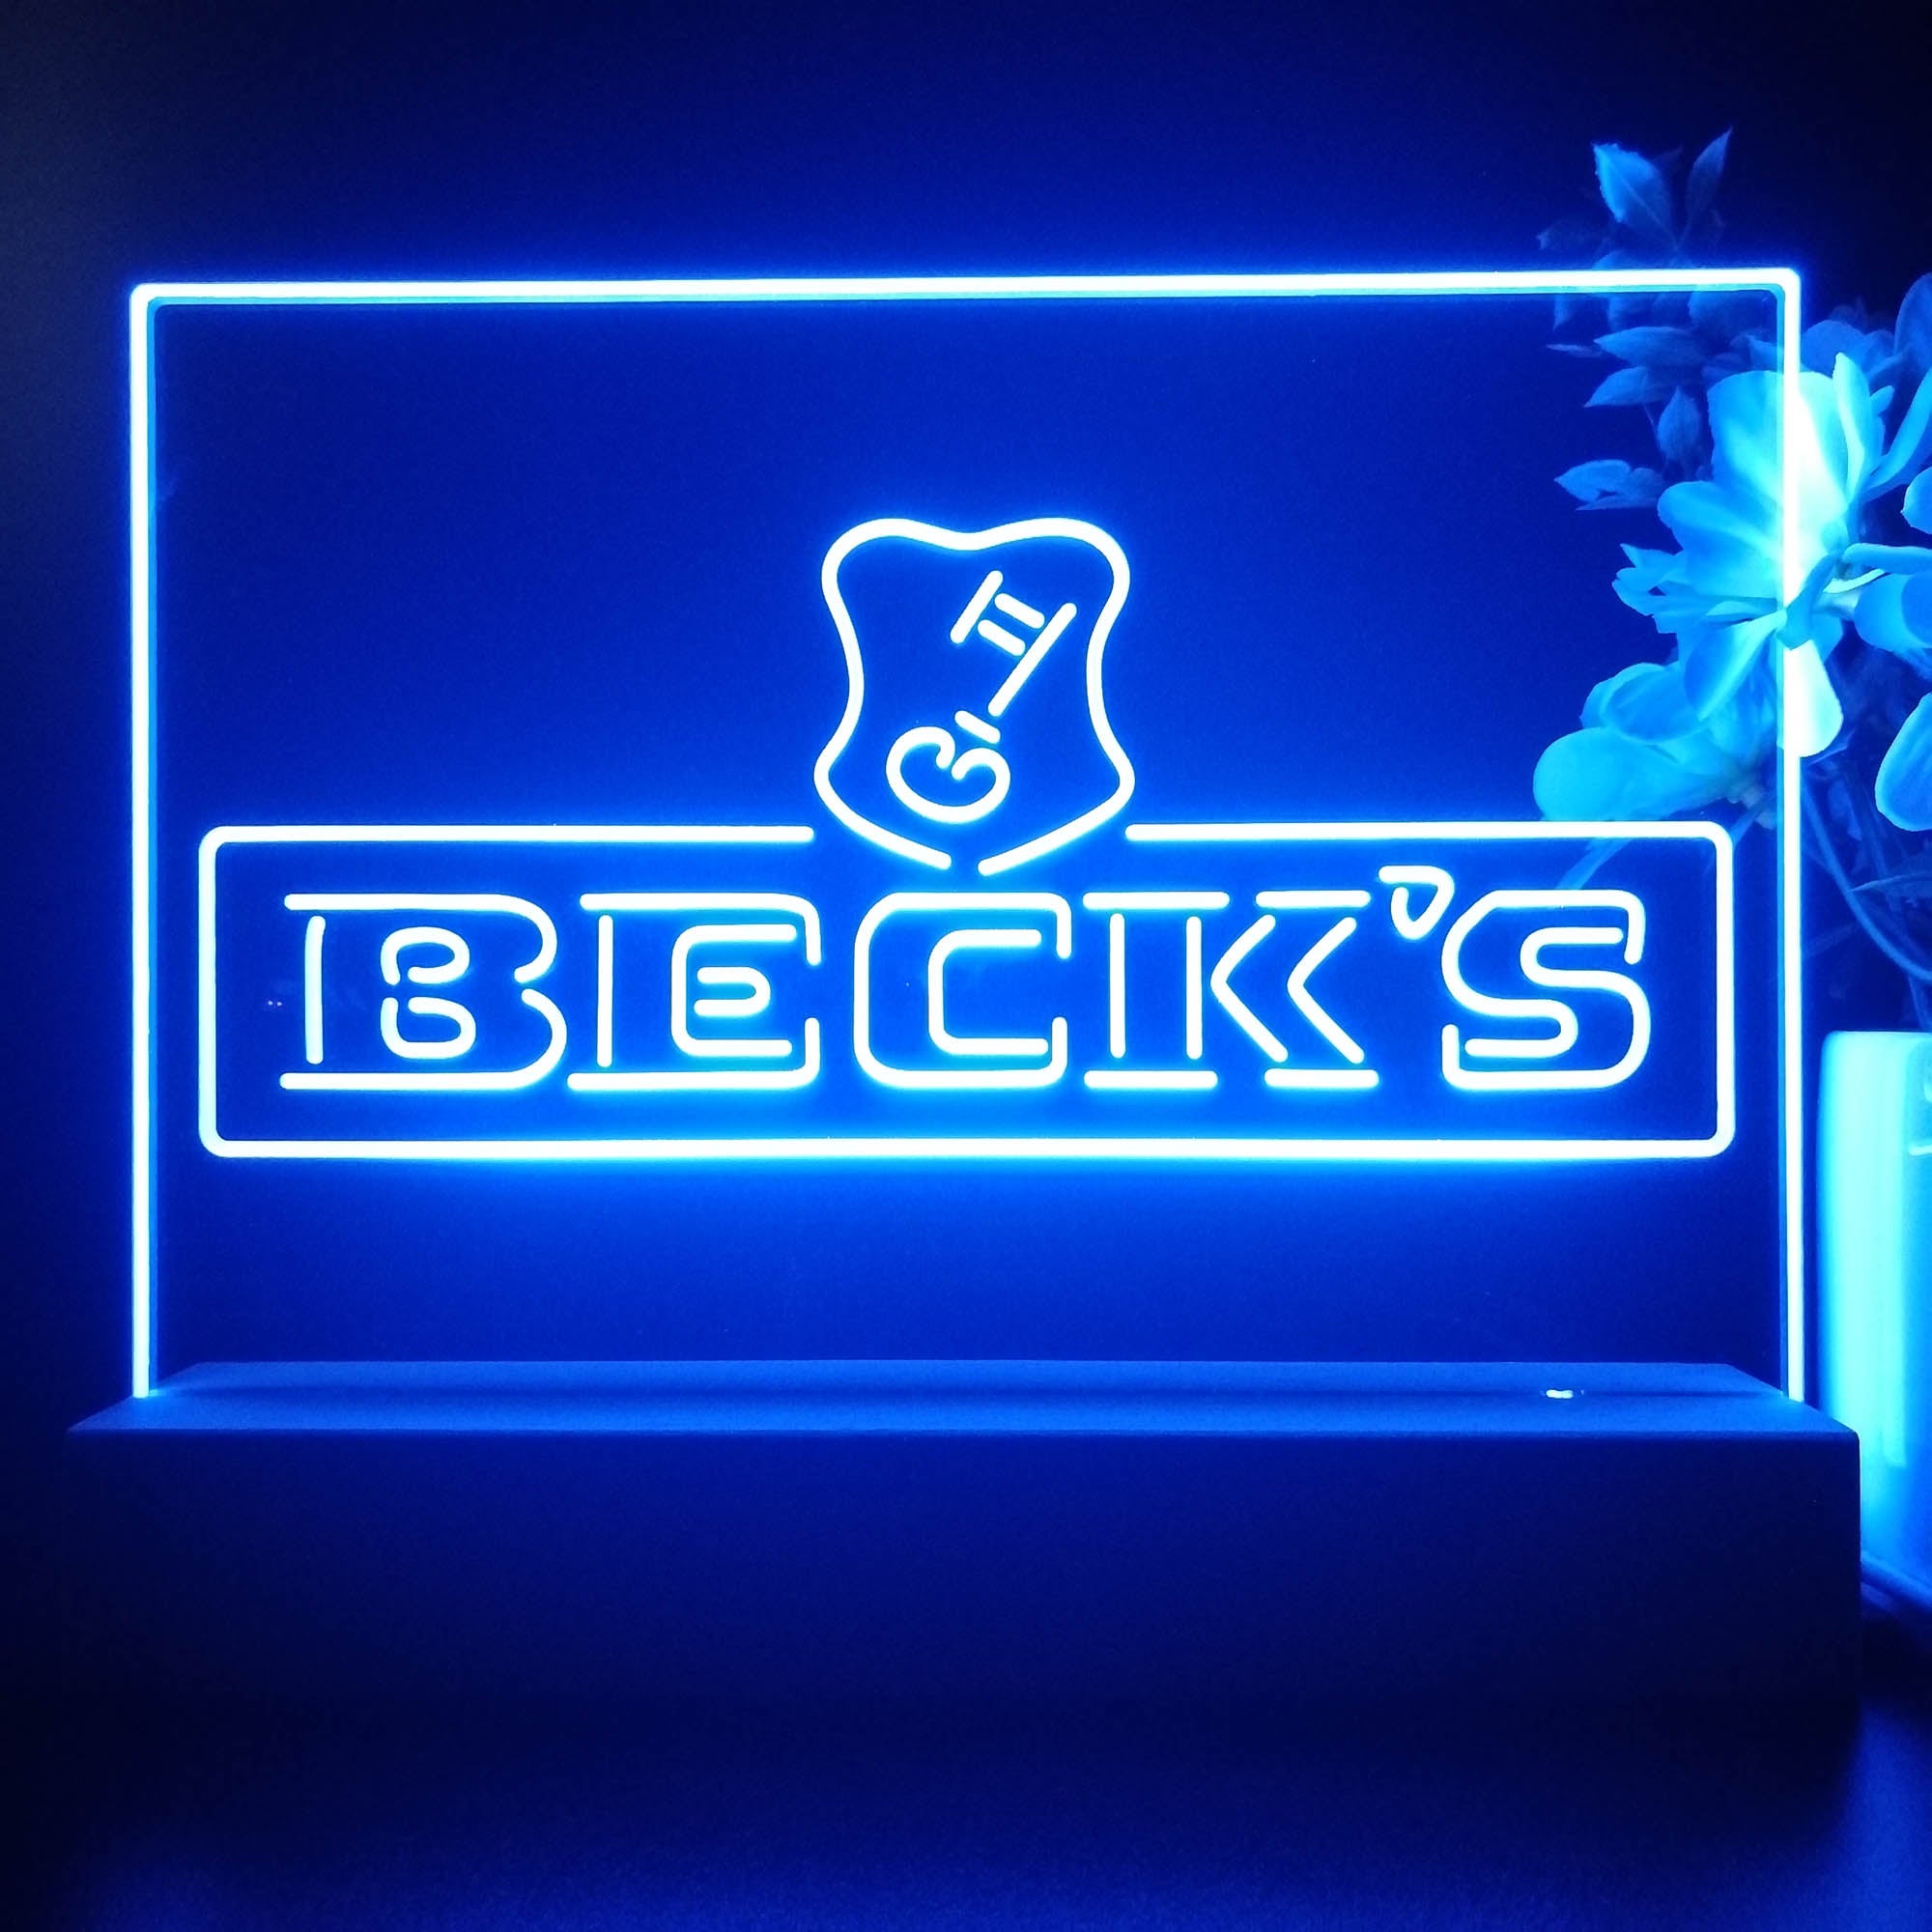 Beck's Beer Neon Sign Pub Bar Lamp